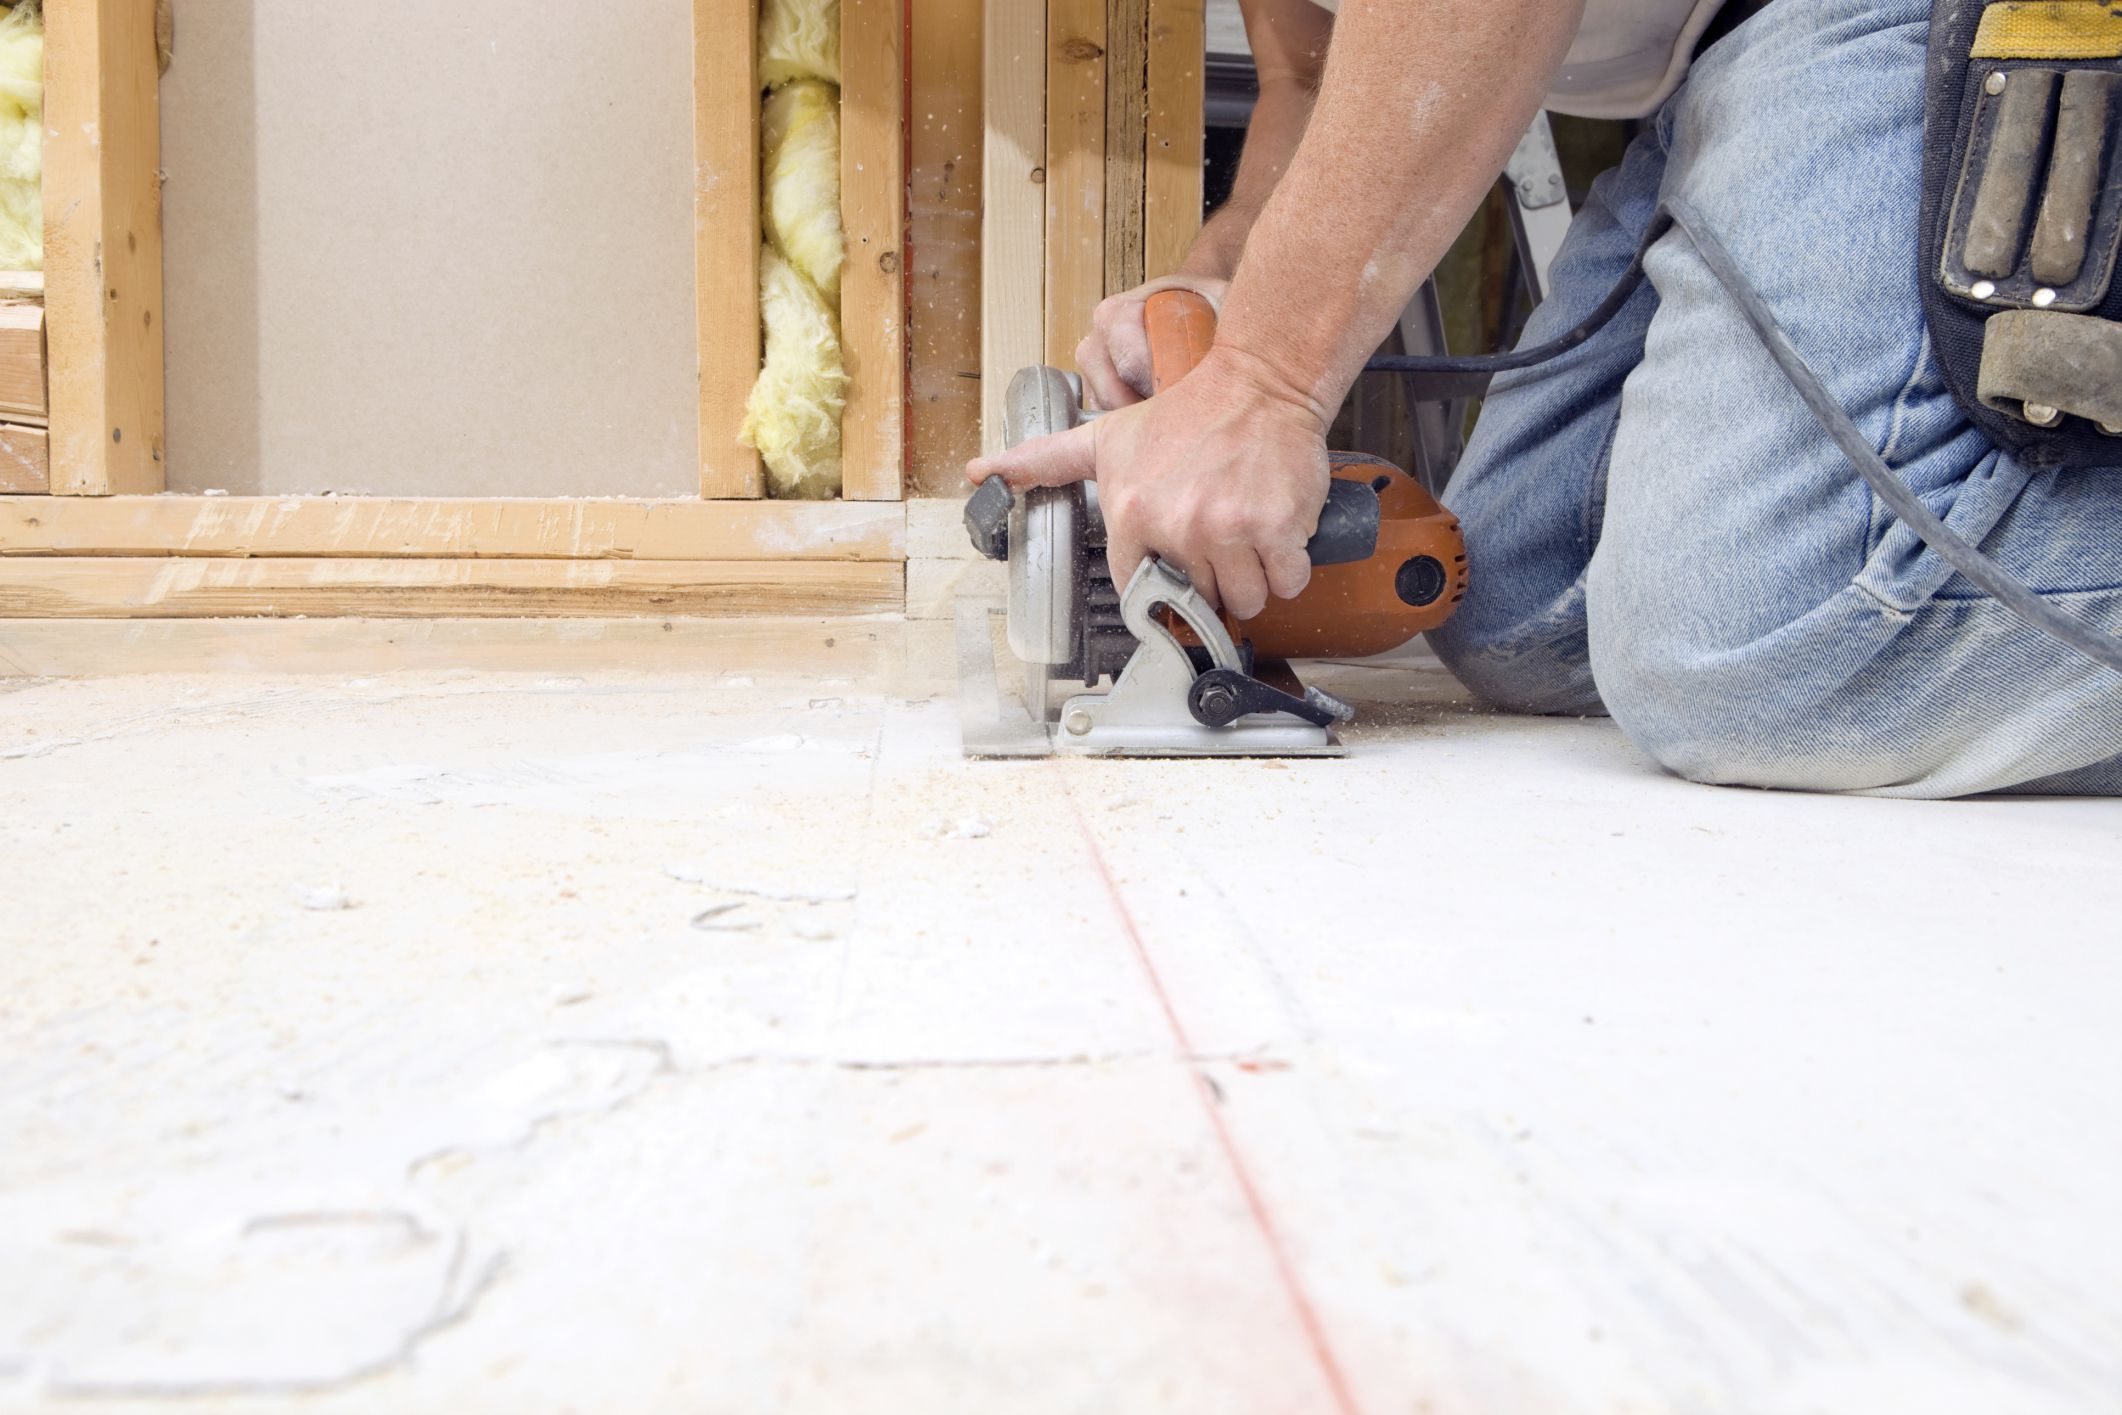 11 Lovable Hardwood Floor Refinishing Sacramento 2024 free download hardwood floor refinishing sacramento of plywood or osb for flooring regarding cutting plywood subfloor with circular saw 185001220 56a4a04b5f9b58b7d0d7e37f